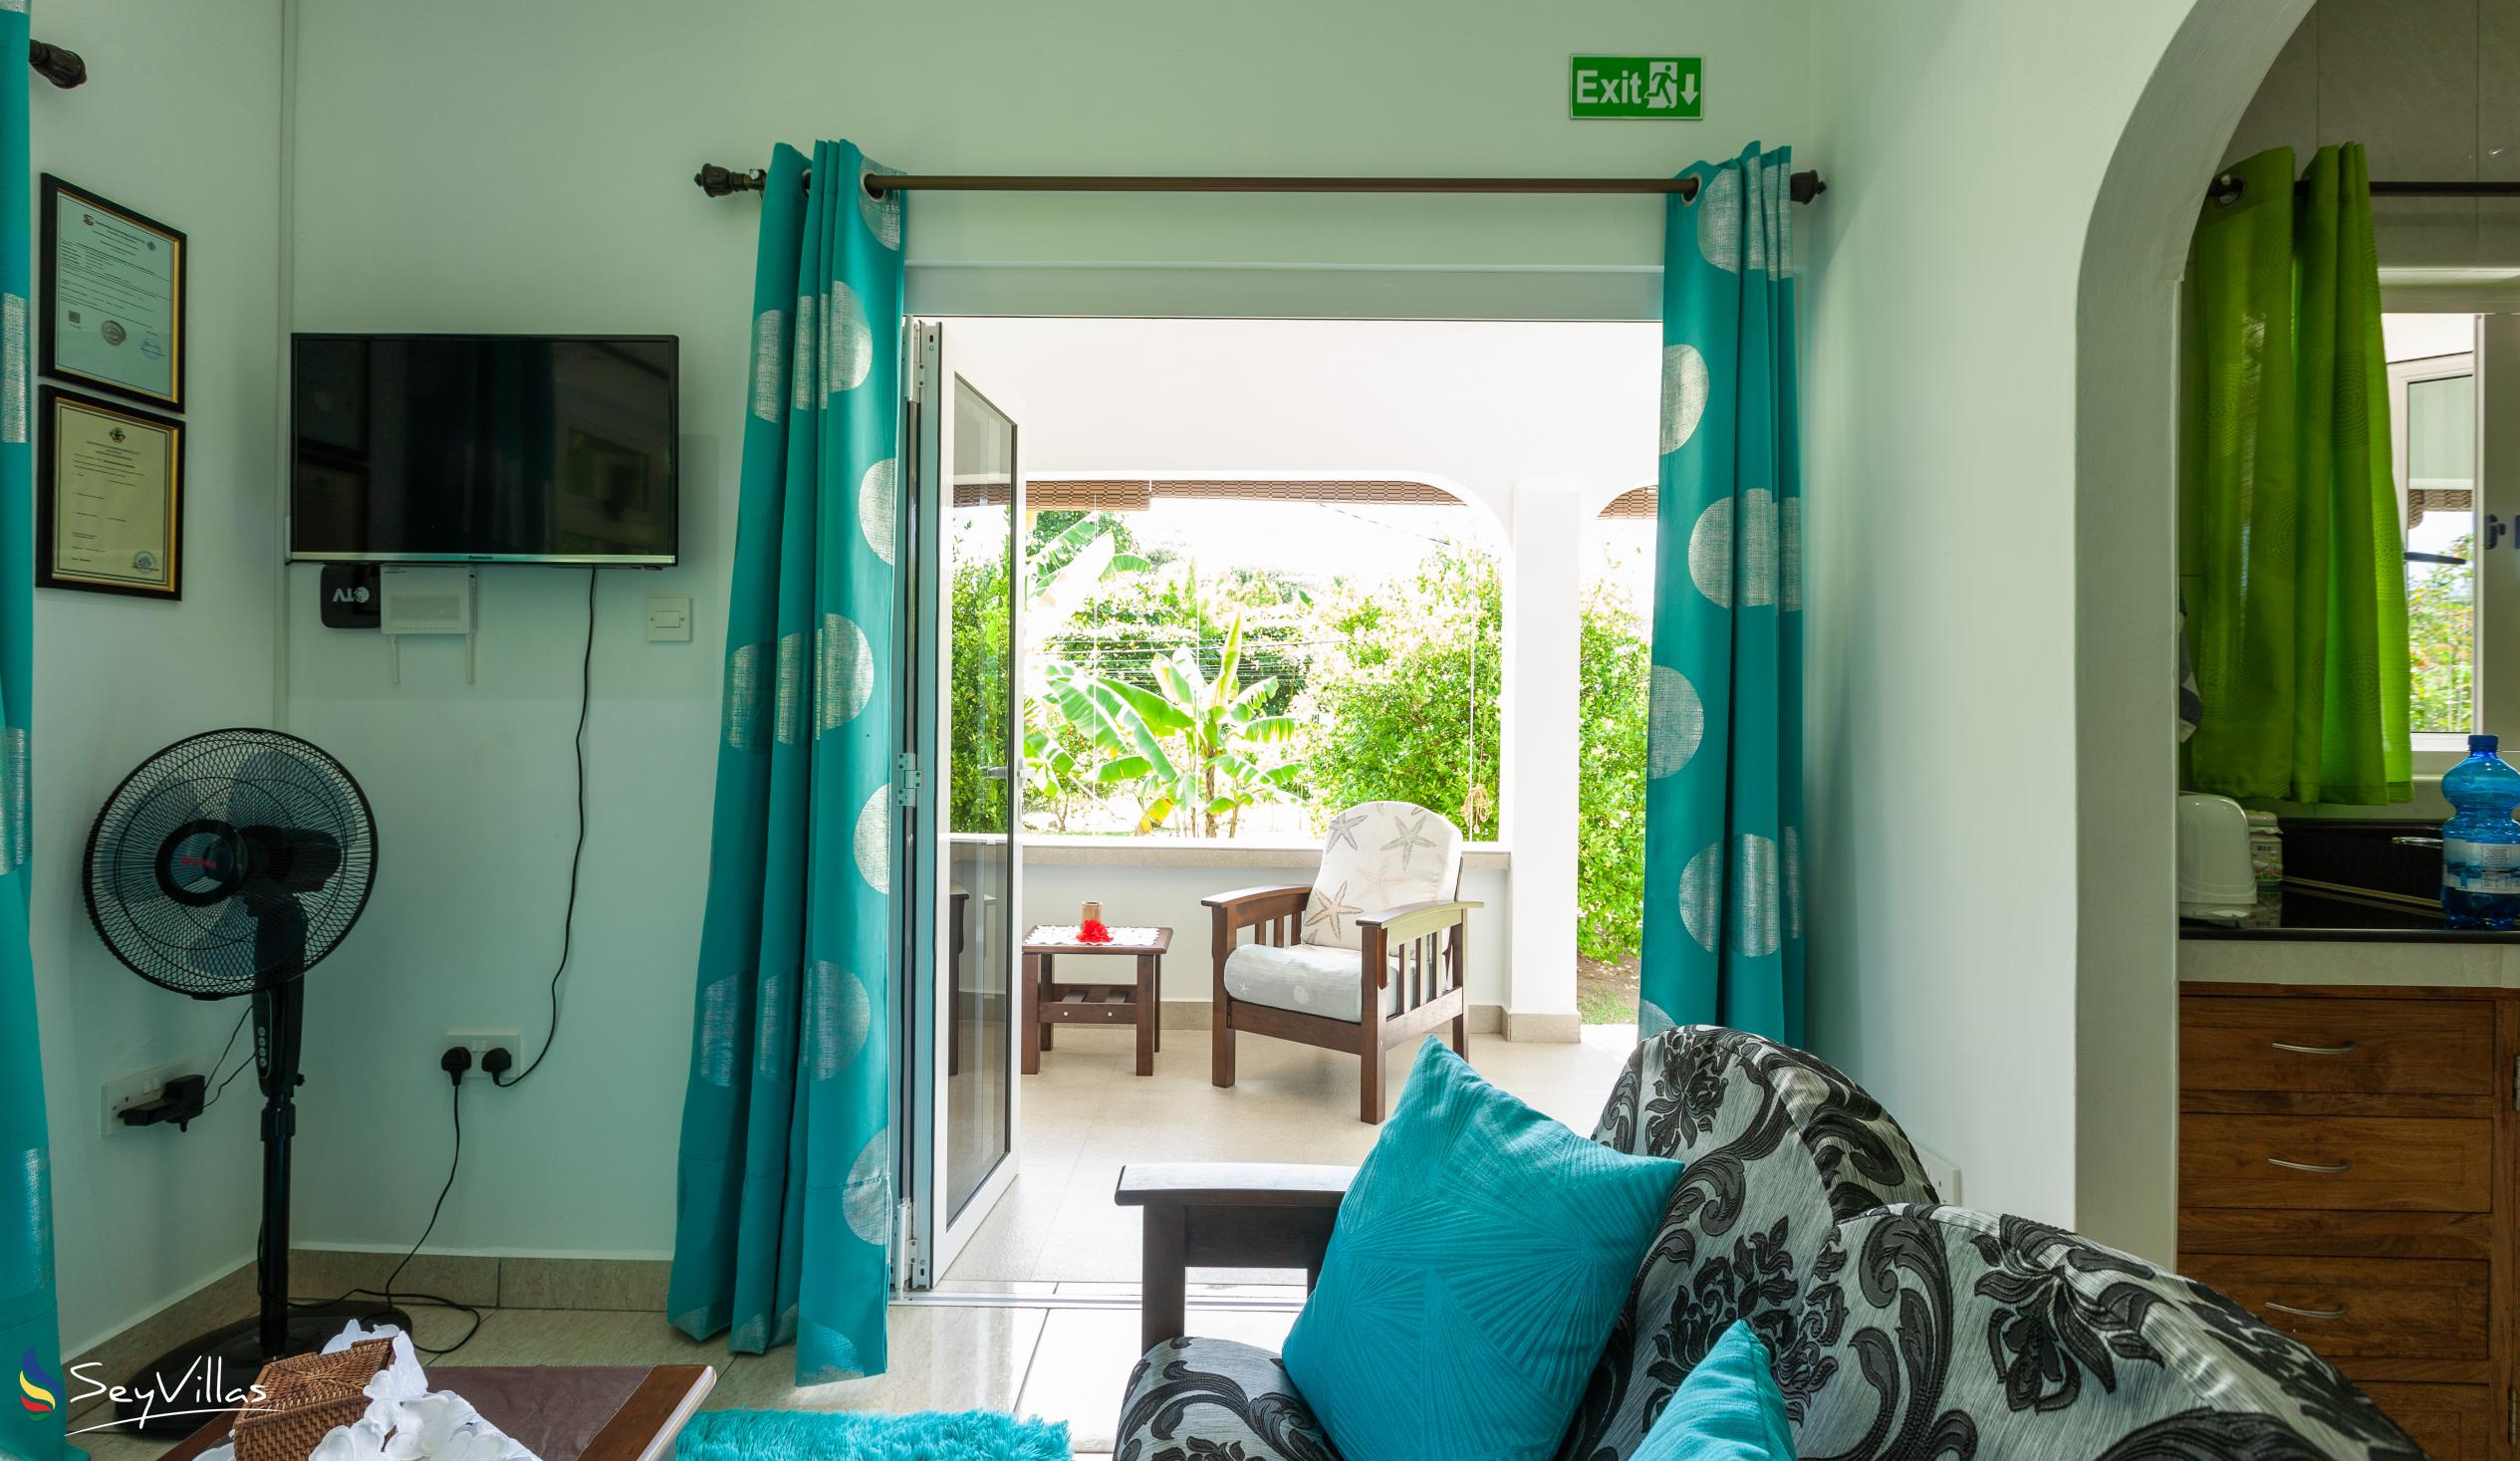 Foto 20: Destination Self-Catering - Villa con 1 camera - Praslin (Seychelles)